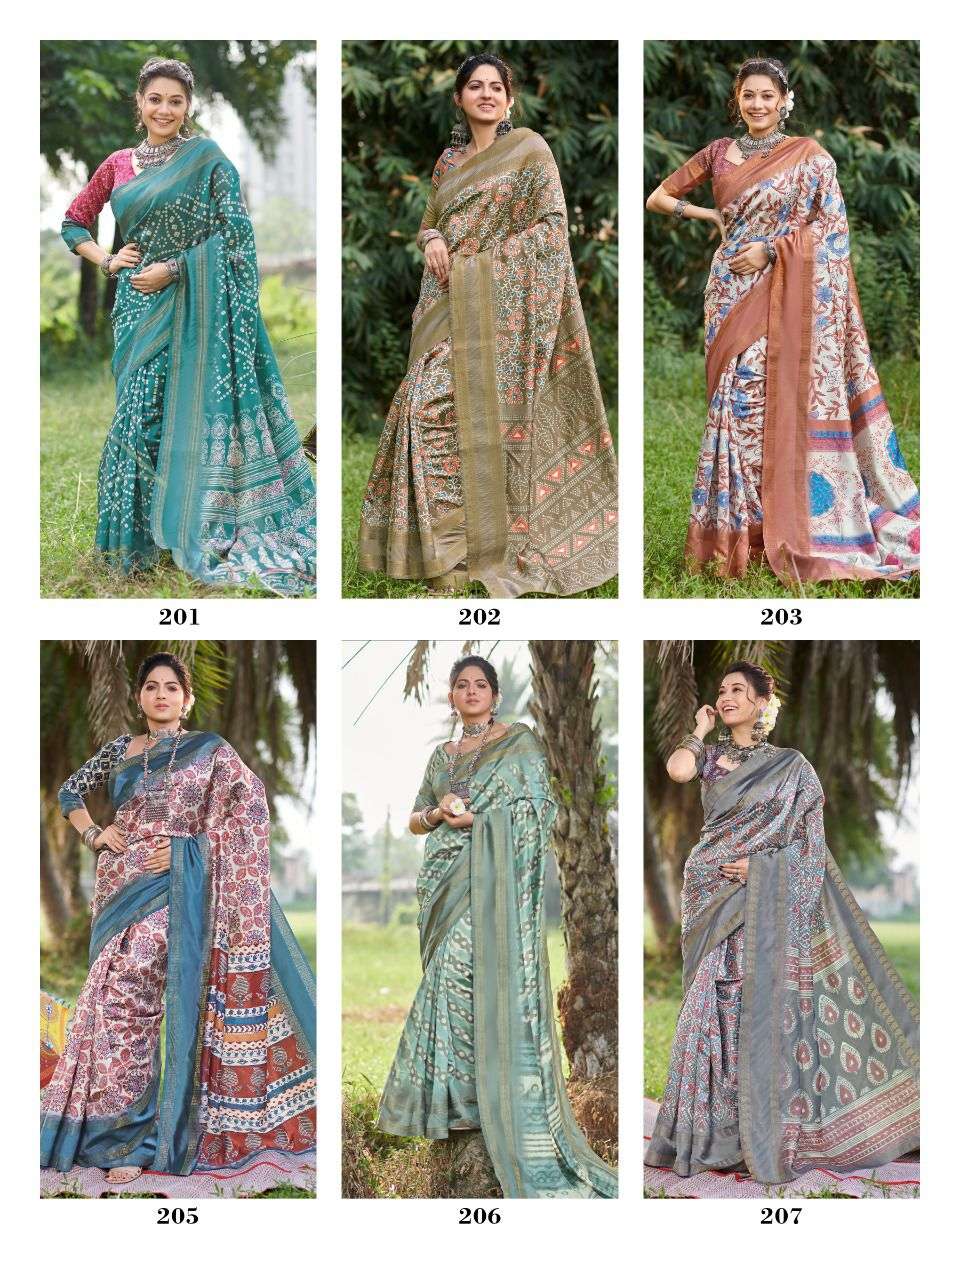 apple kasavu silk vol 2 201-208 series attractive look designer saree catalogue manufacturer surat 